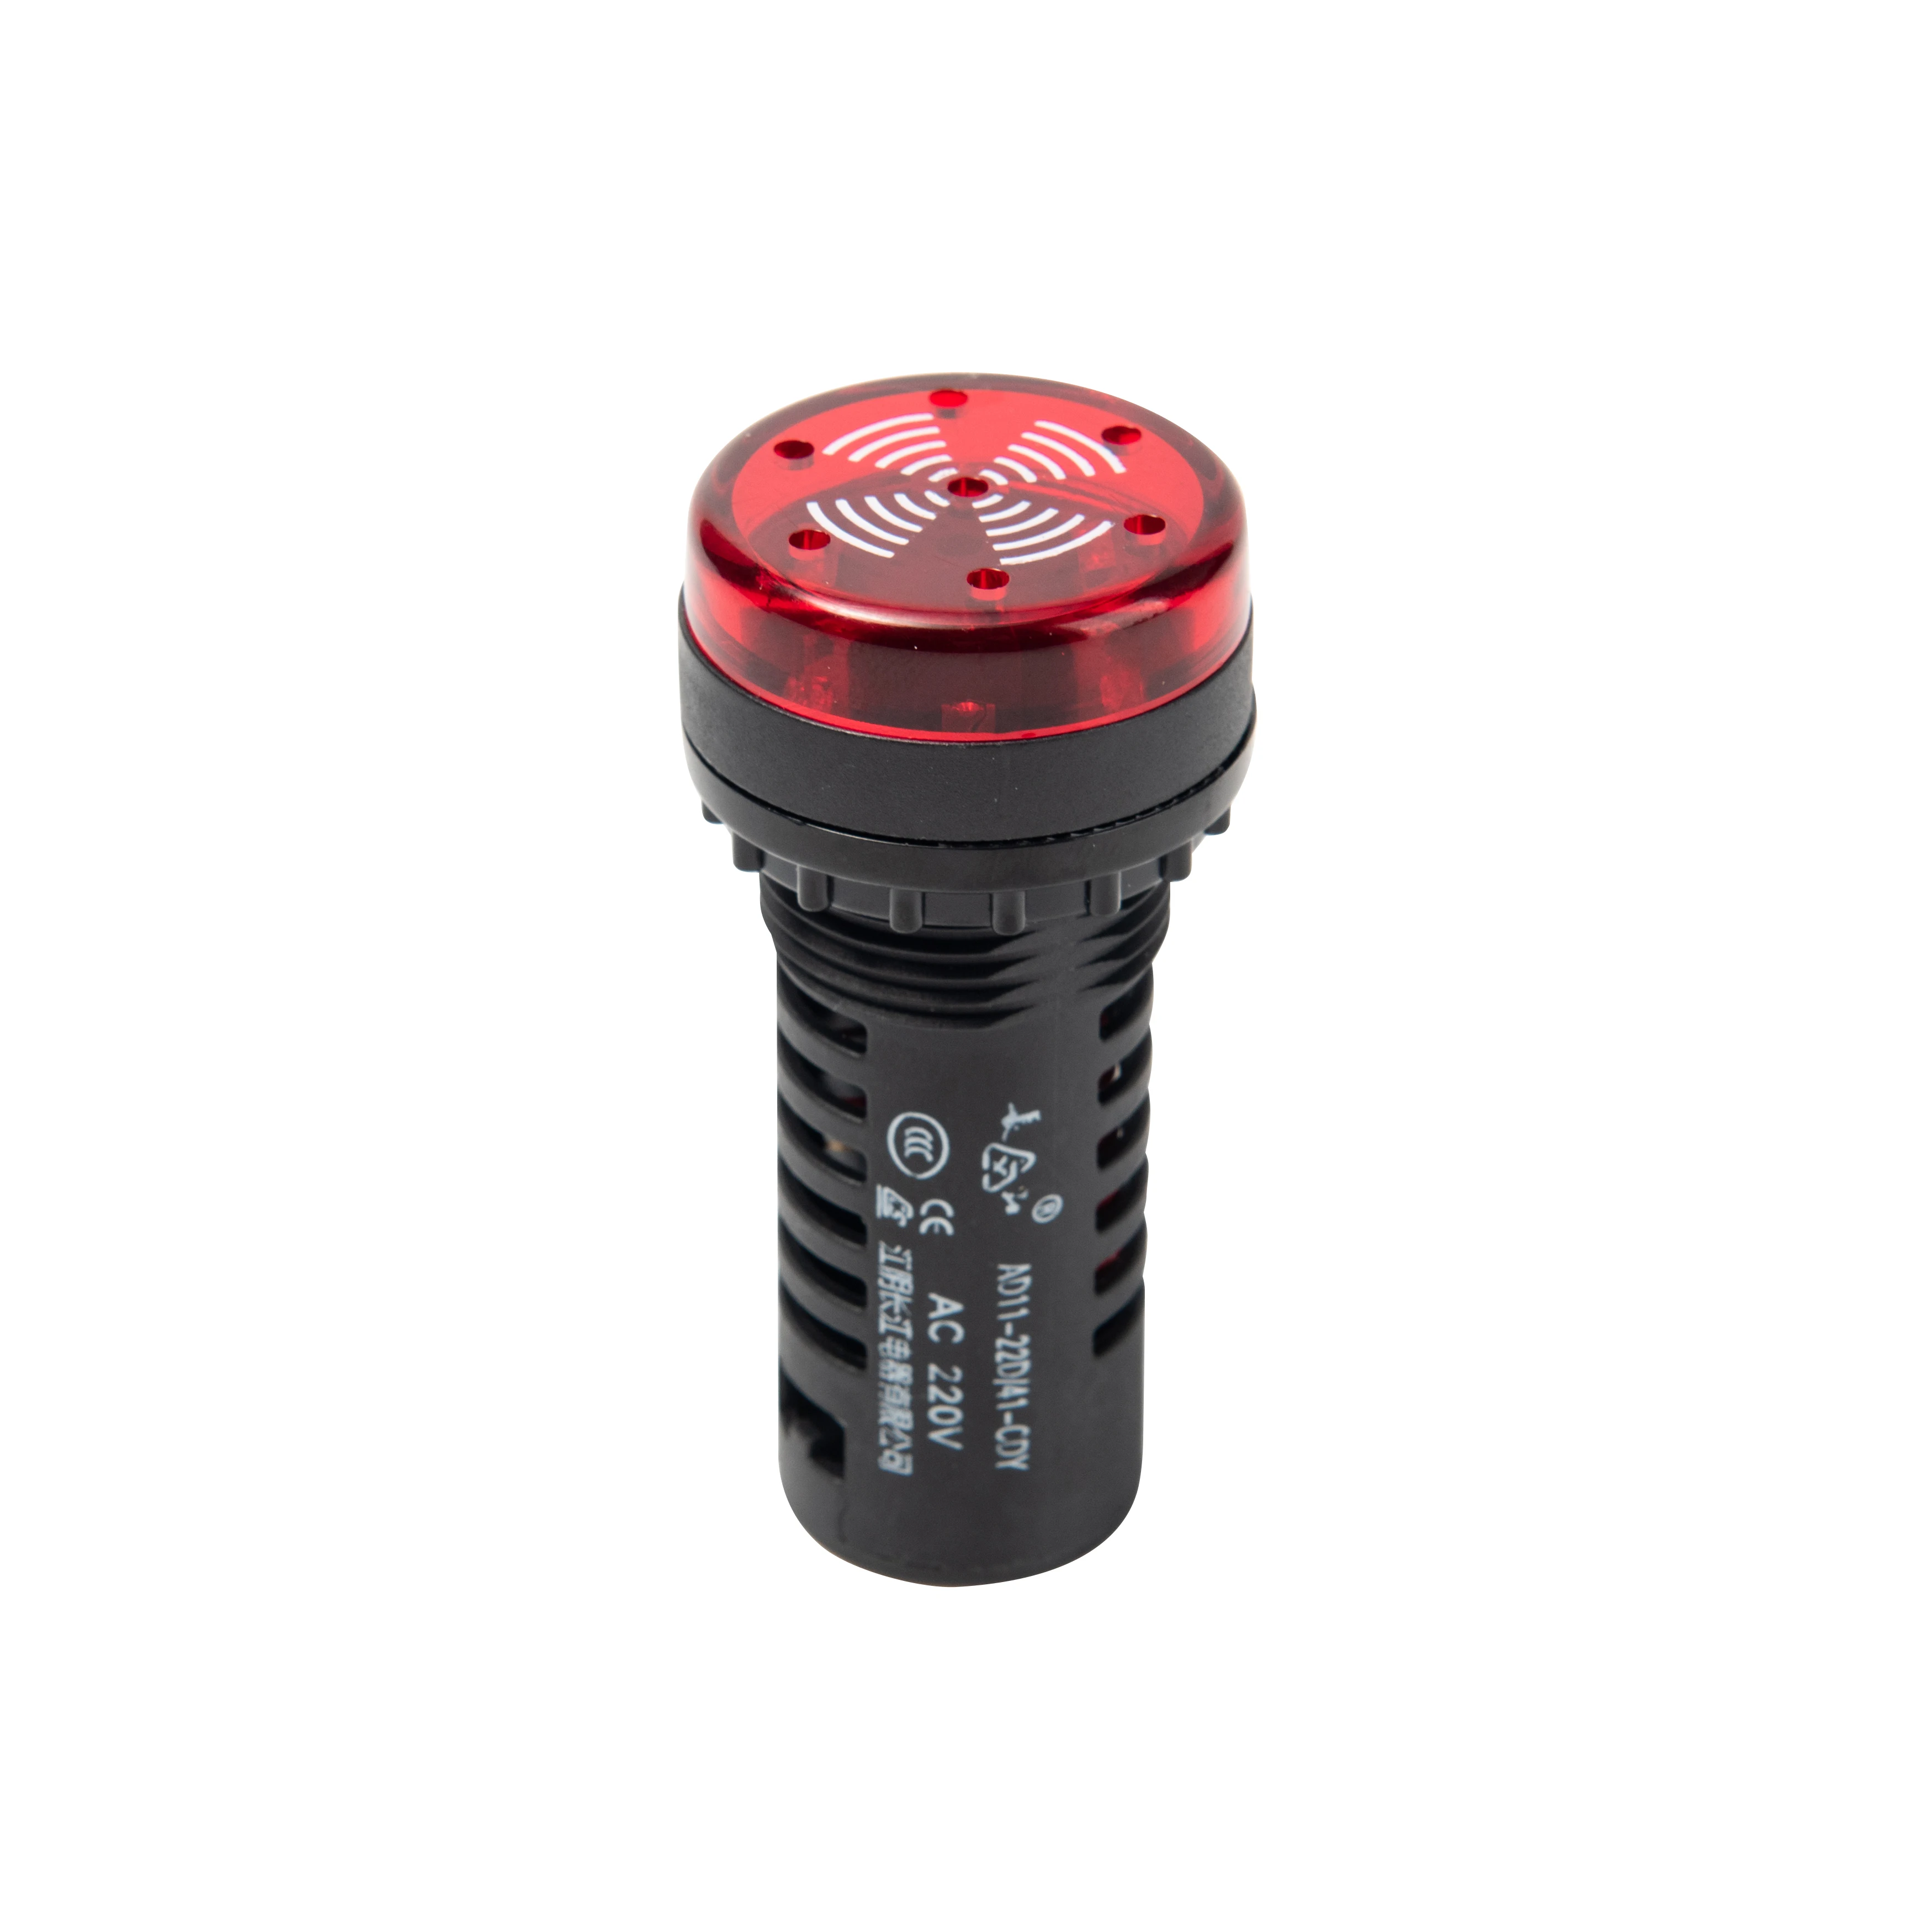 
AD11 22 series 22mm red 220V Indicator Light led flash buzzer  (62194435680)